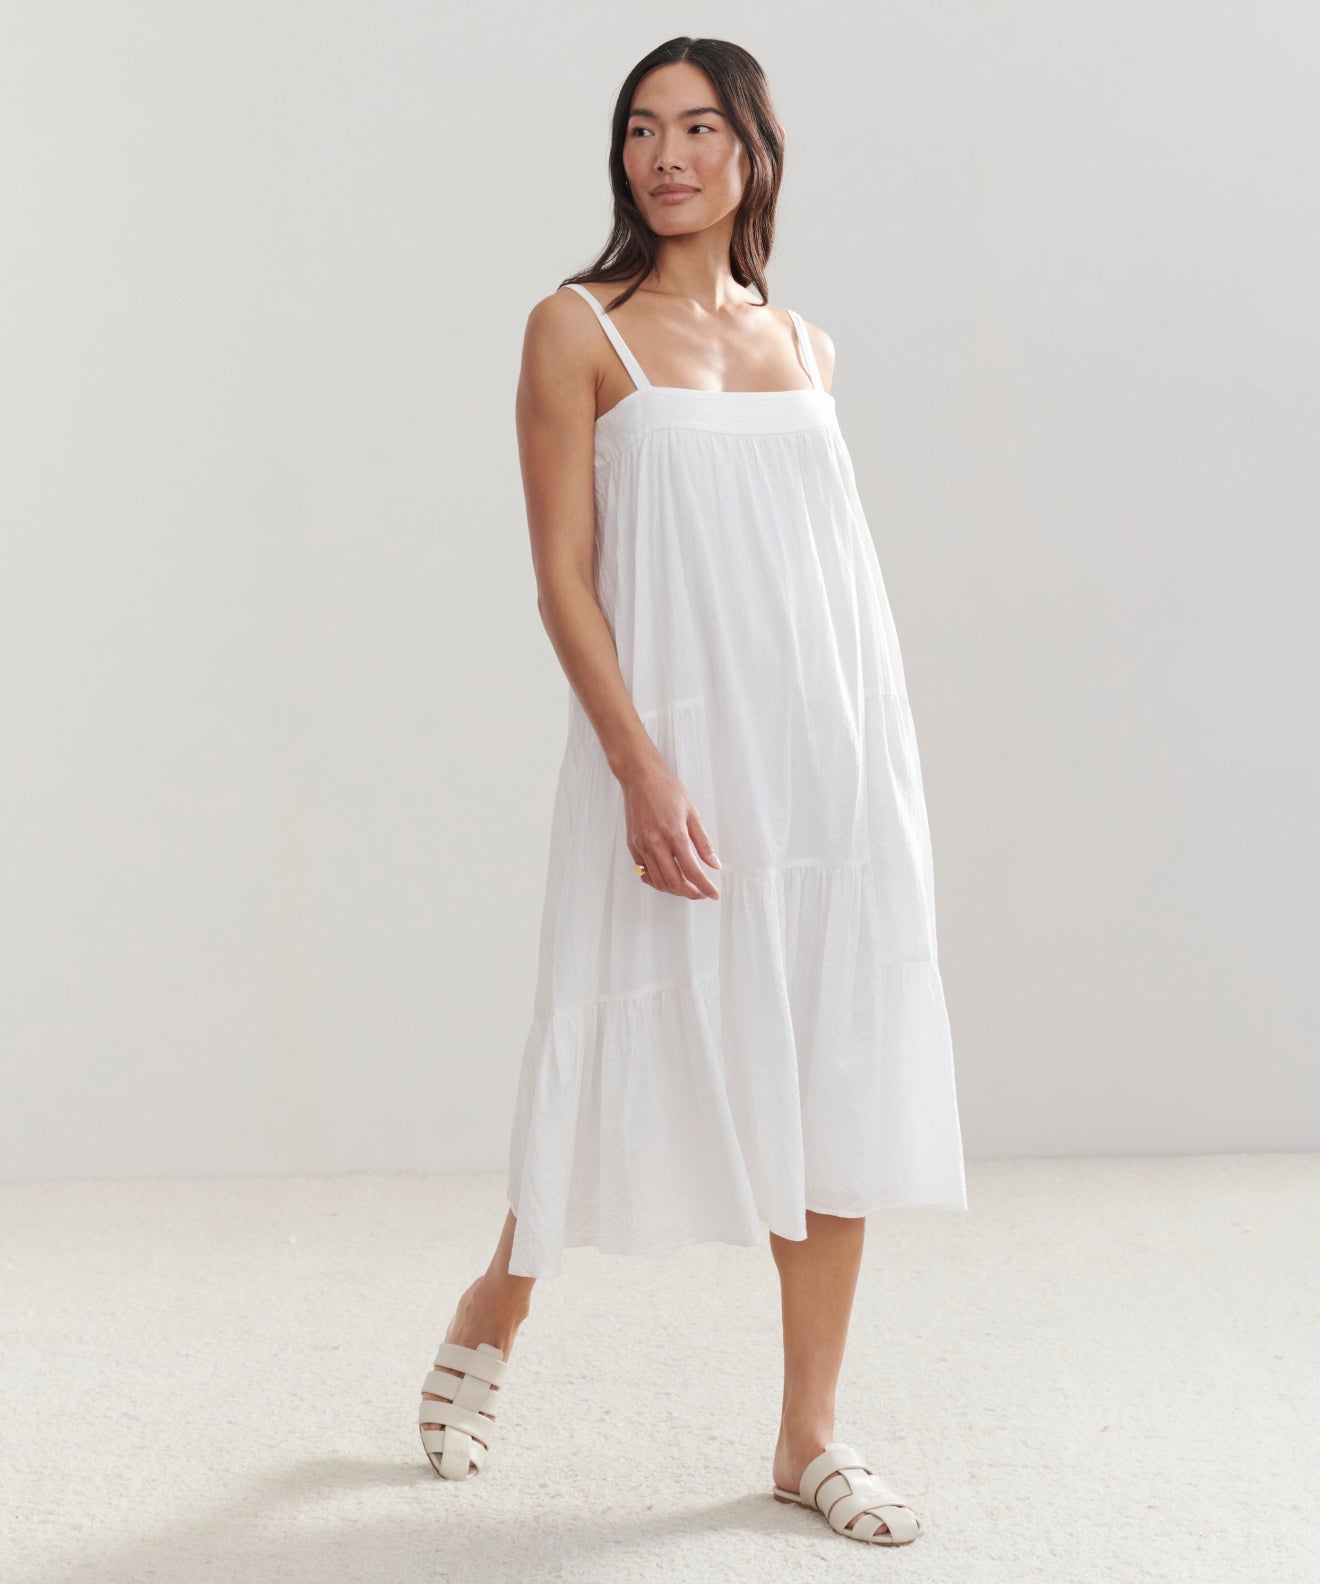 Seersucker Summer Dress – Jenni Kayne